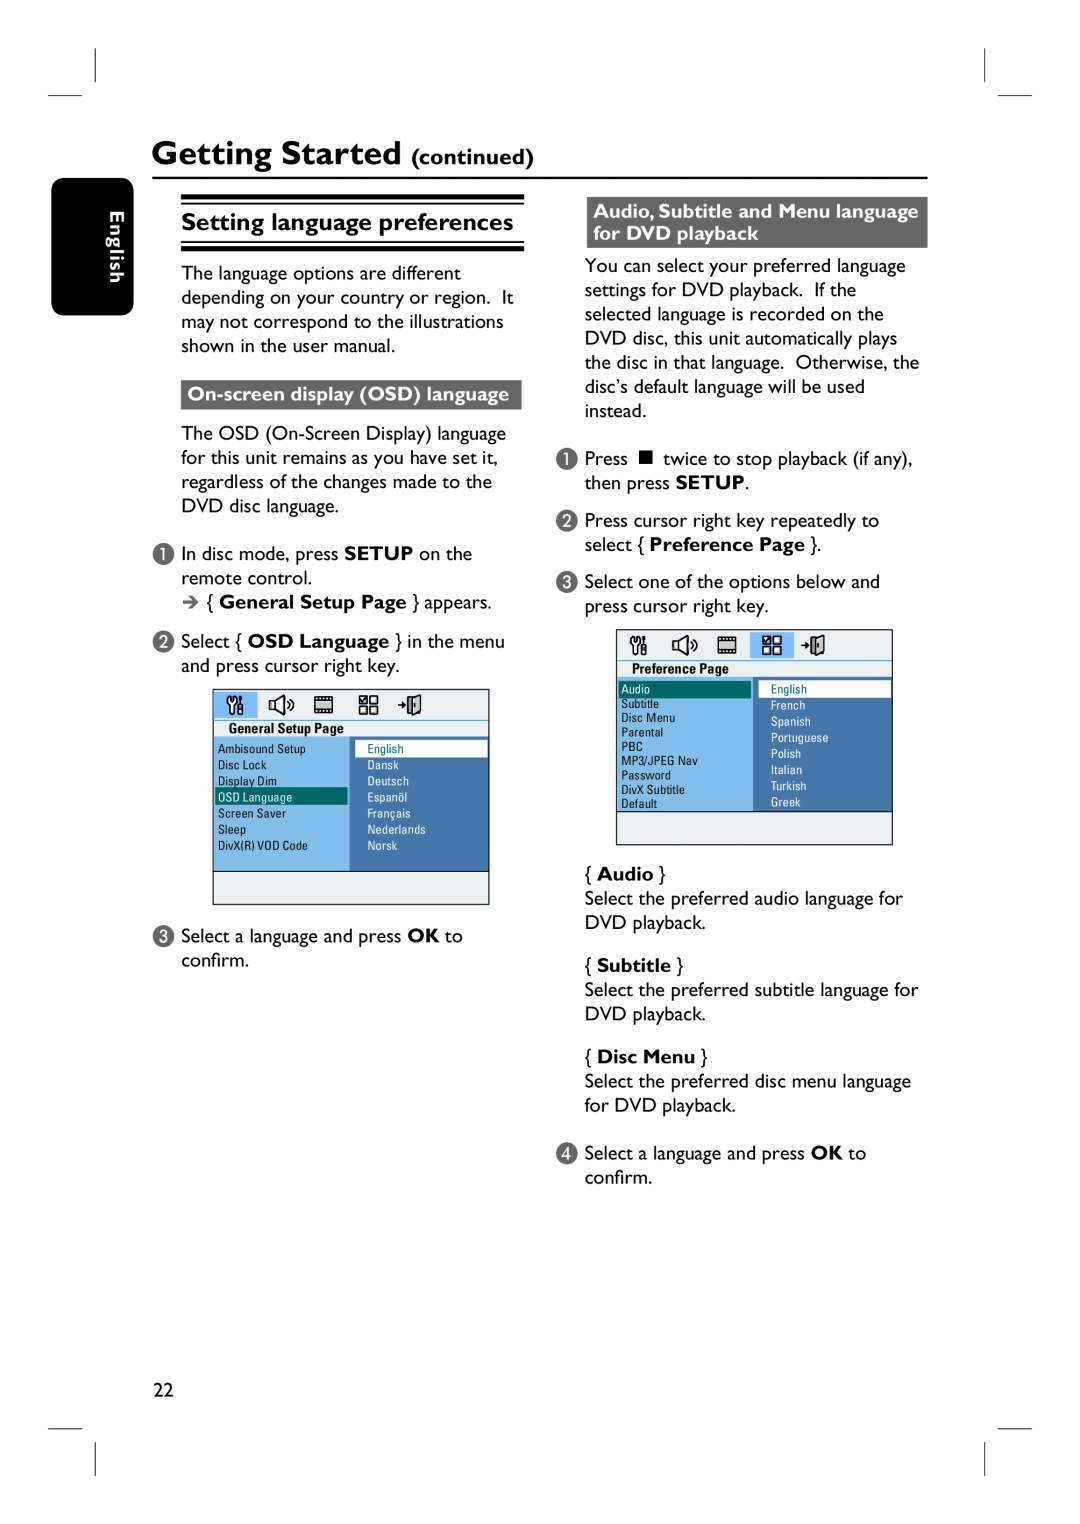 Philips HTS8100 Setting language preferences, English, On-screendisplay OSD language, General Setup Page appears, Audio 